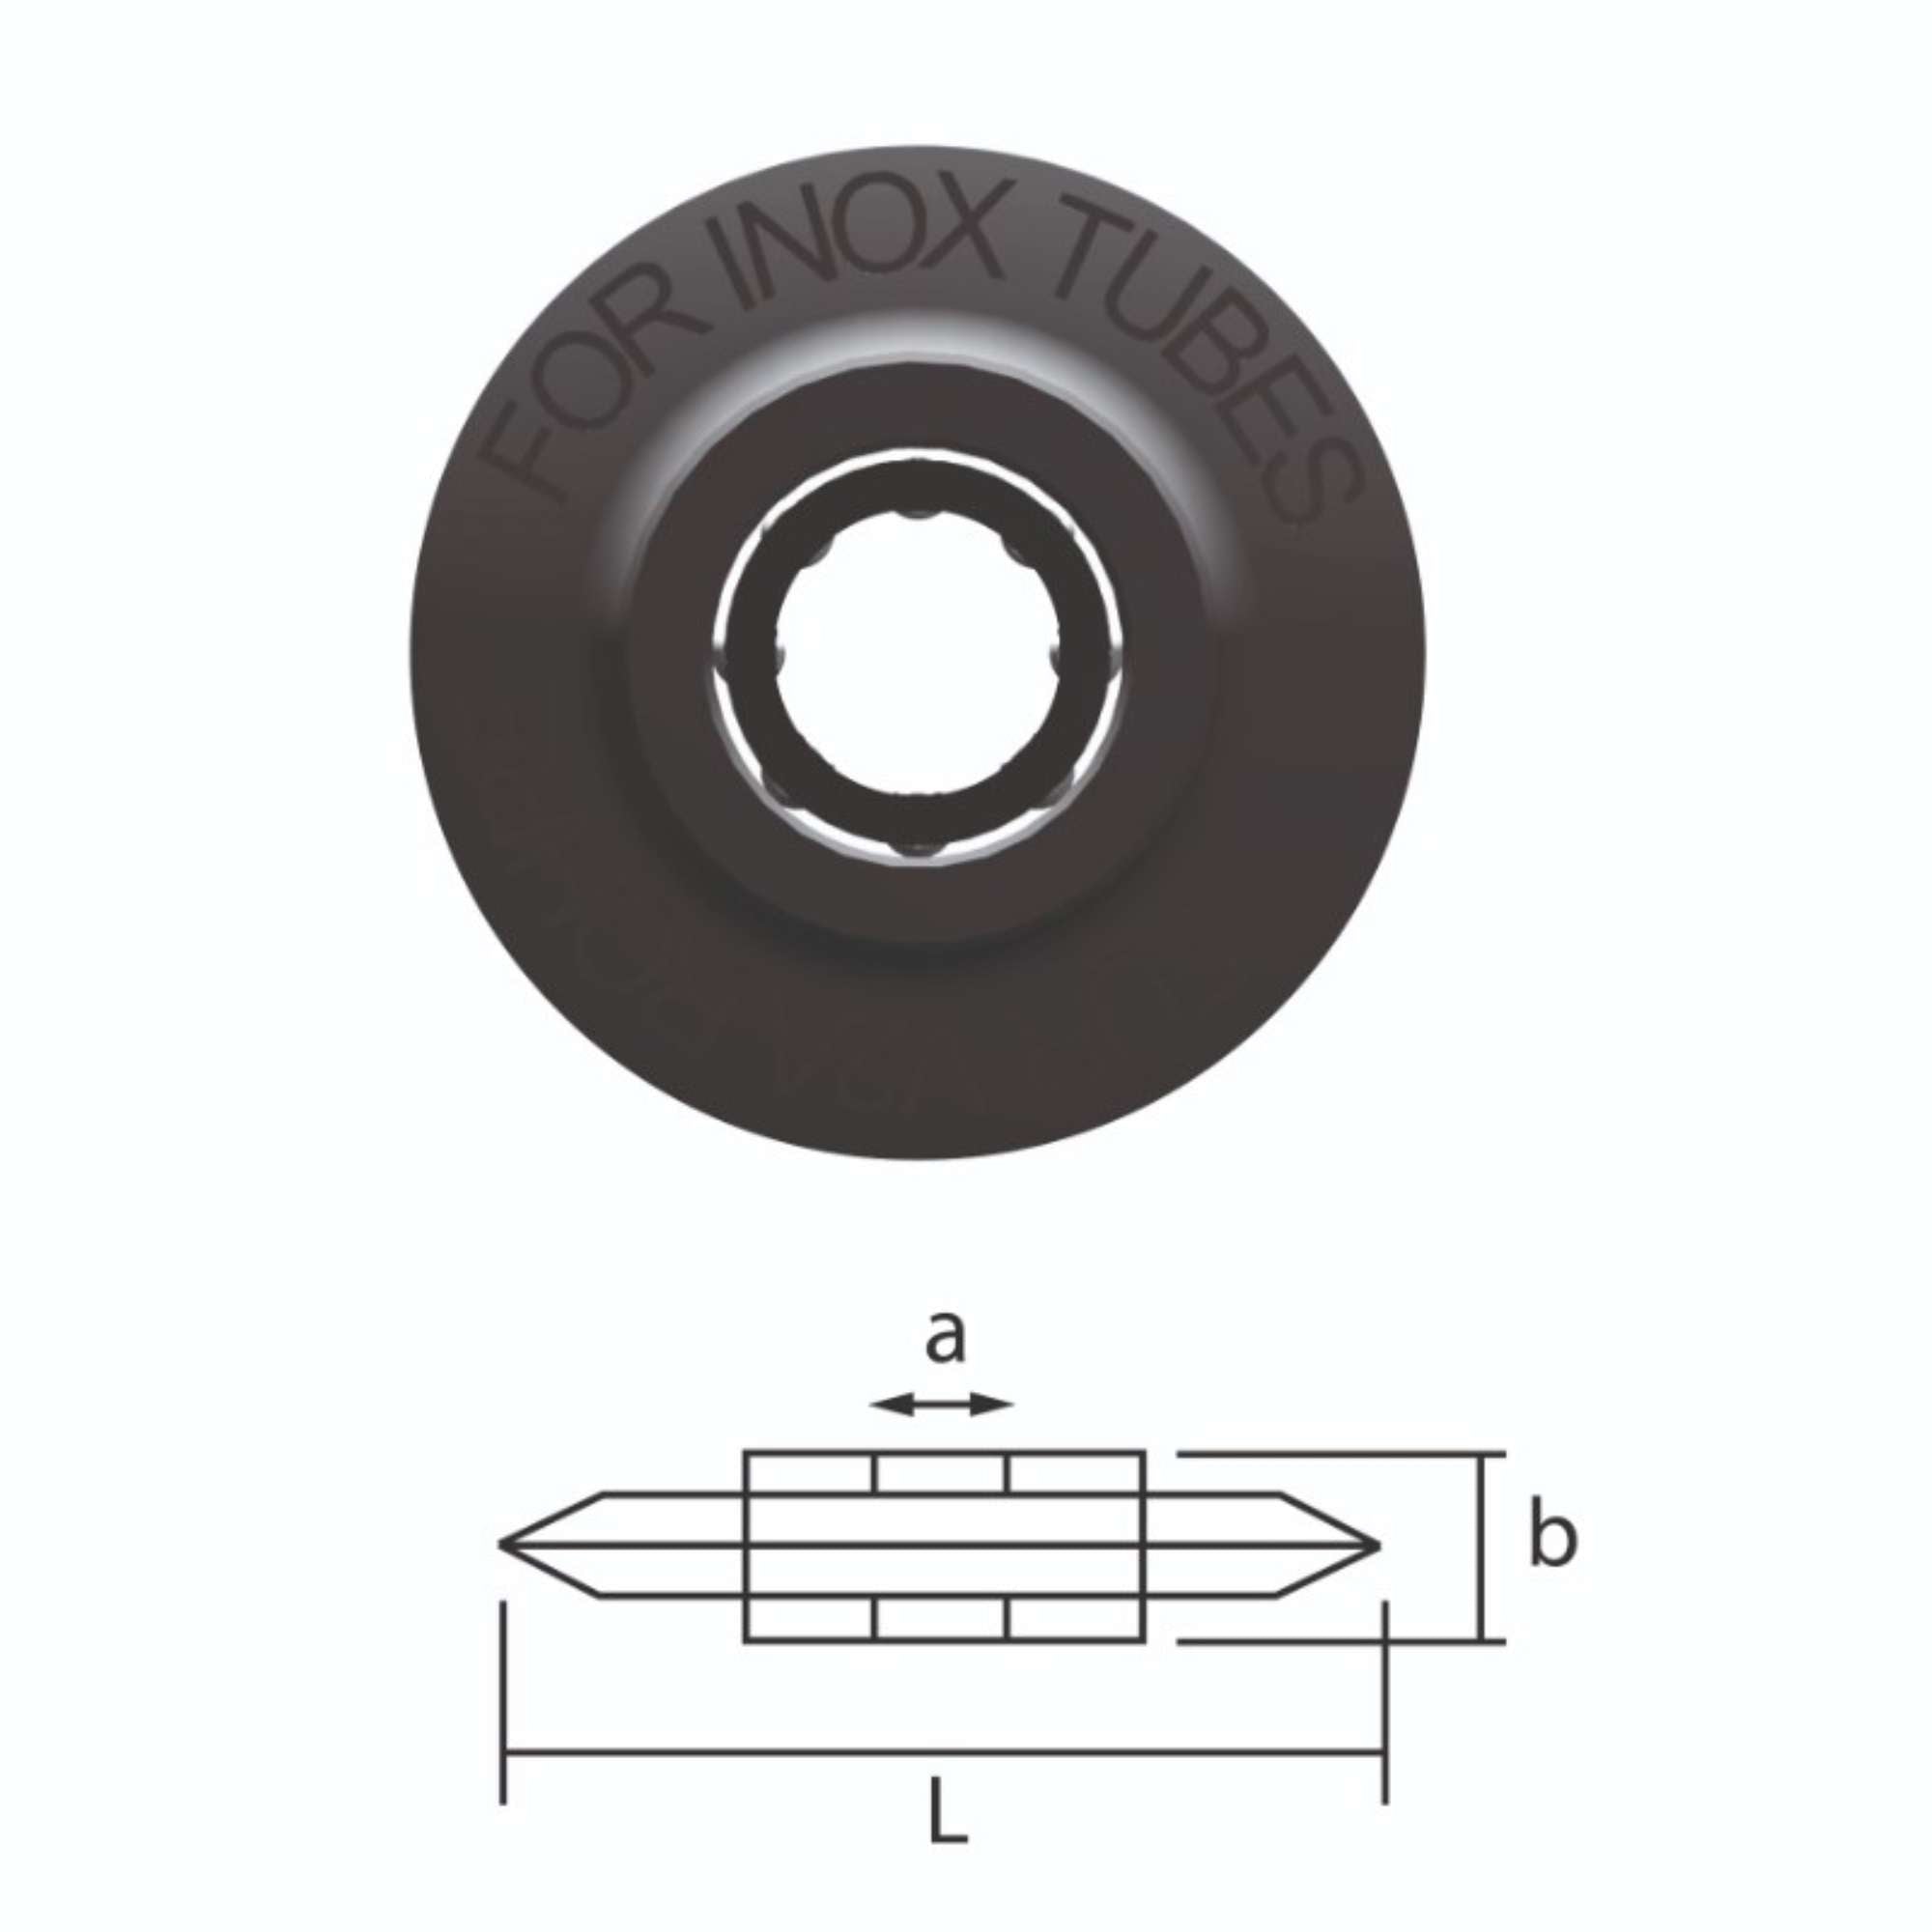 Replacement wheel for 314 DB pipe cutter - Usag 314 DBR U03140034Q